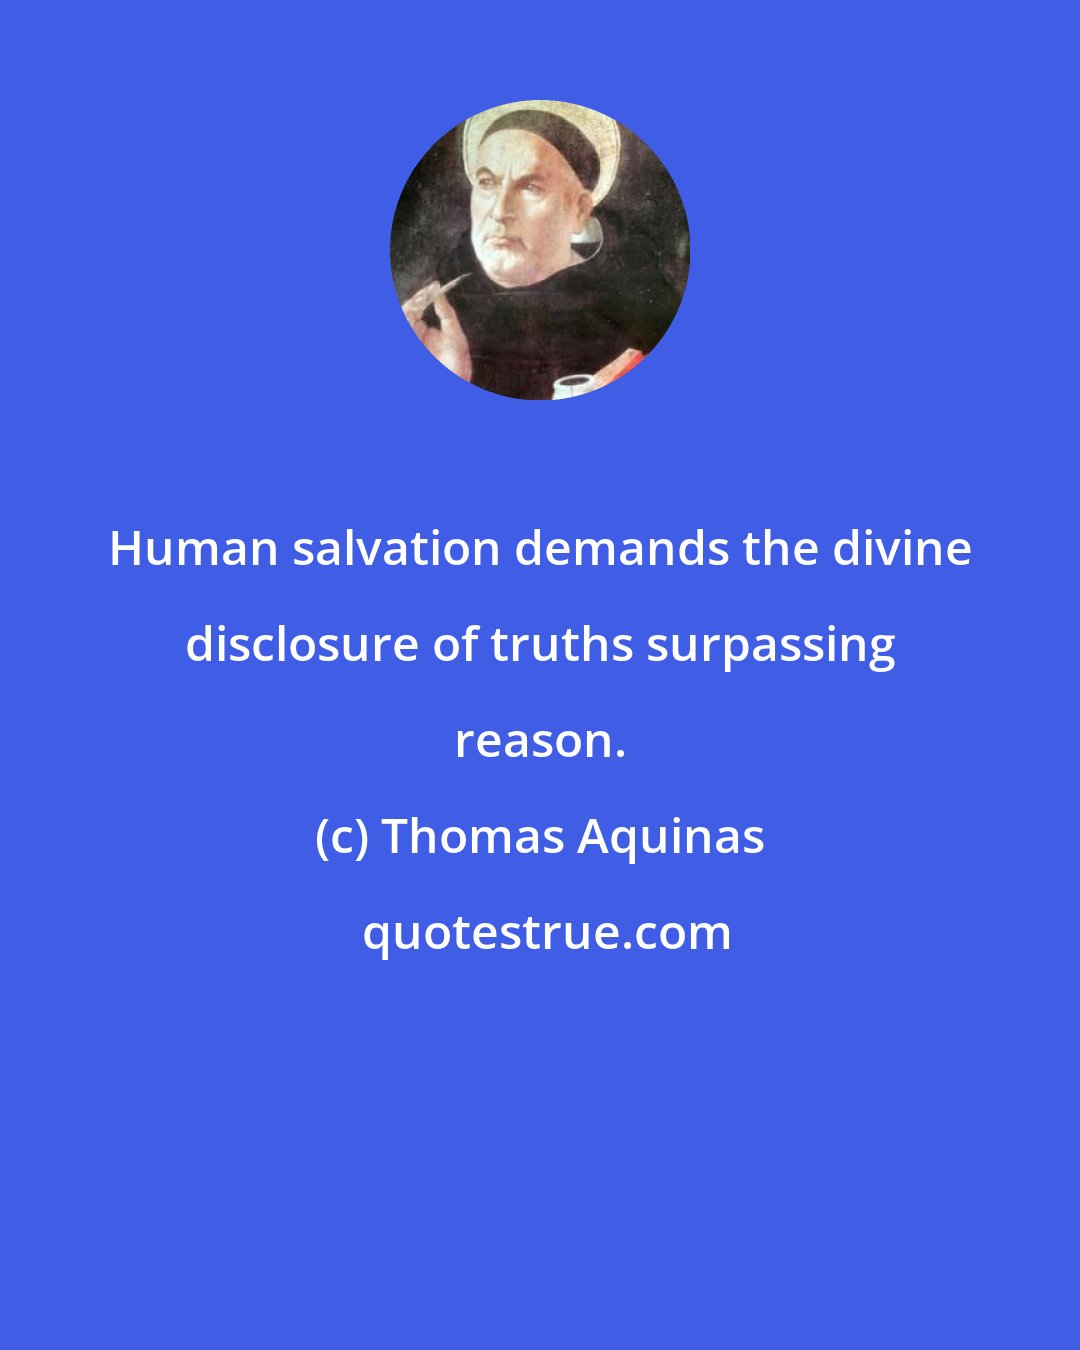 Thomas Aquinas: Human salvation demands the divine disclosure of truths surpassing reason.